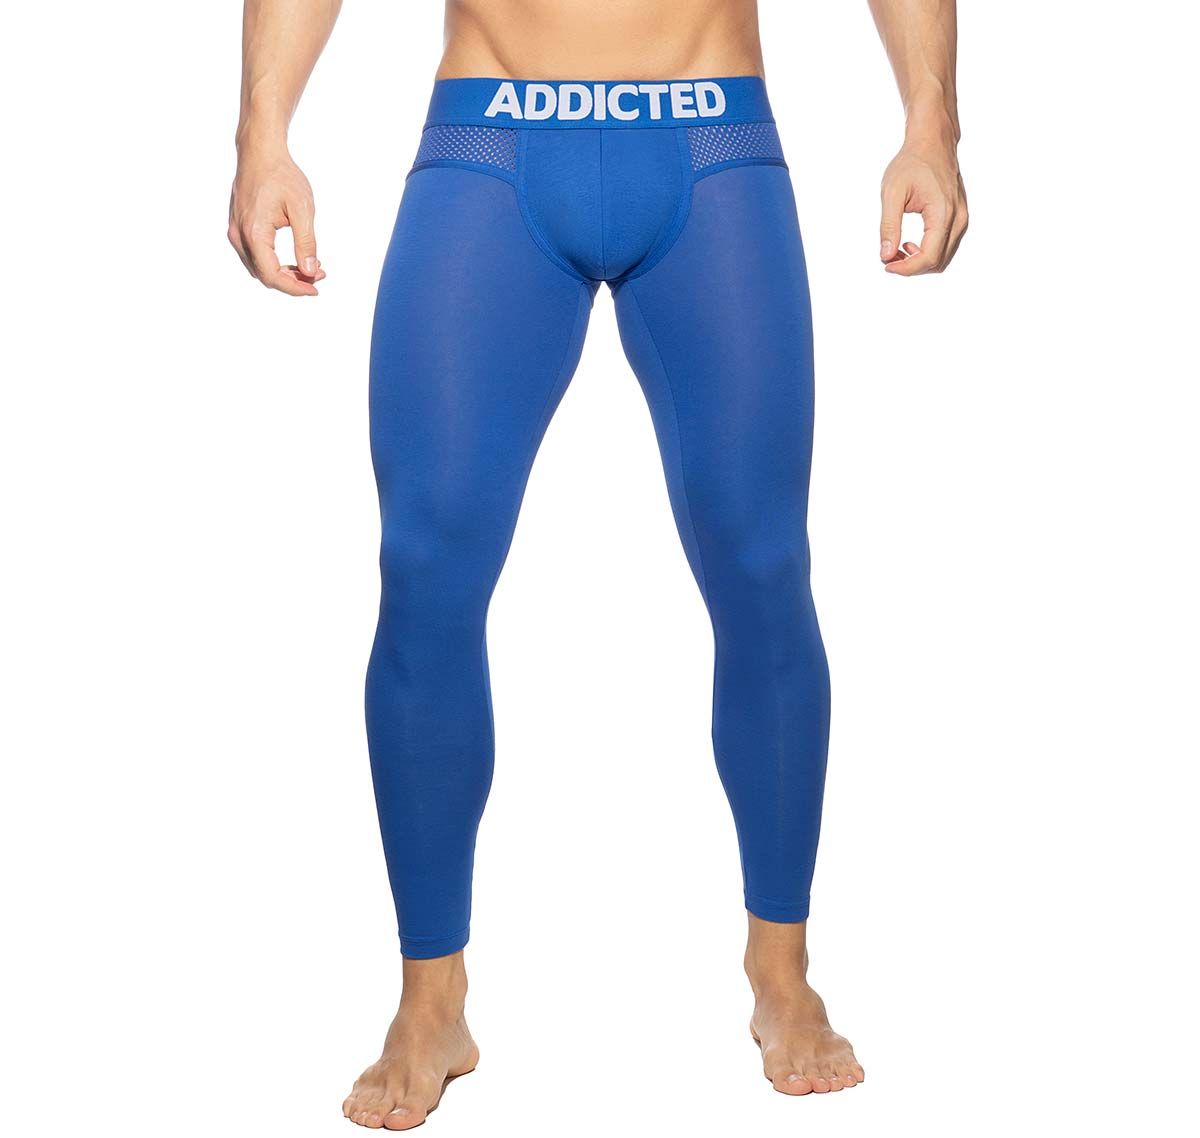 Addicted Leggings BRIEFINGS AD970, azul real